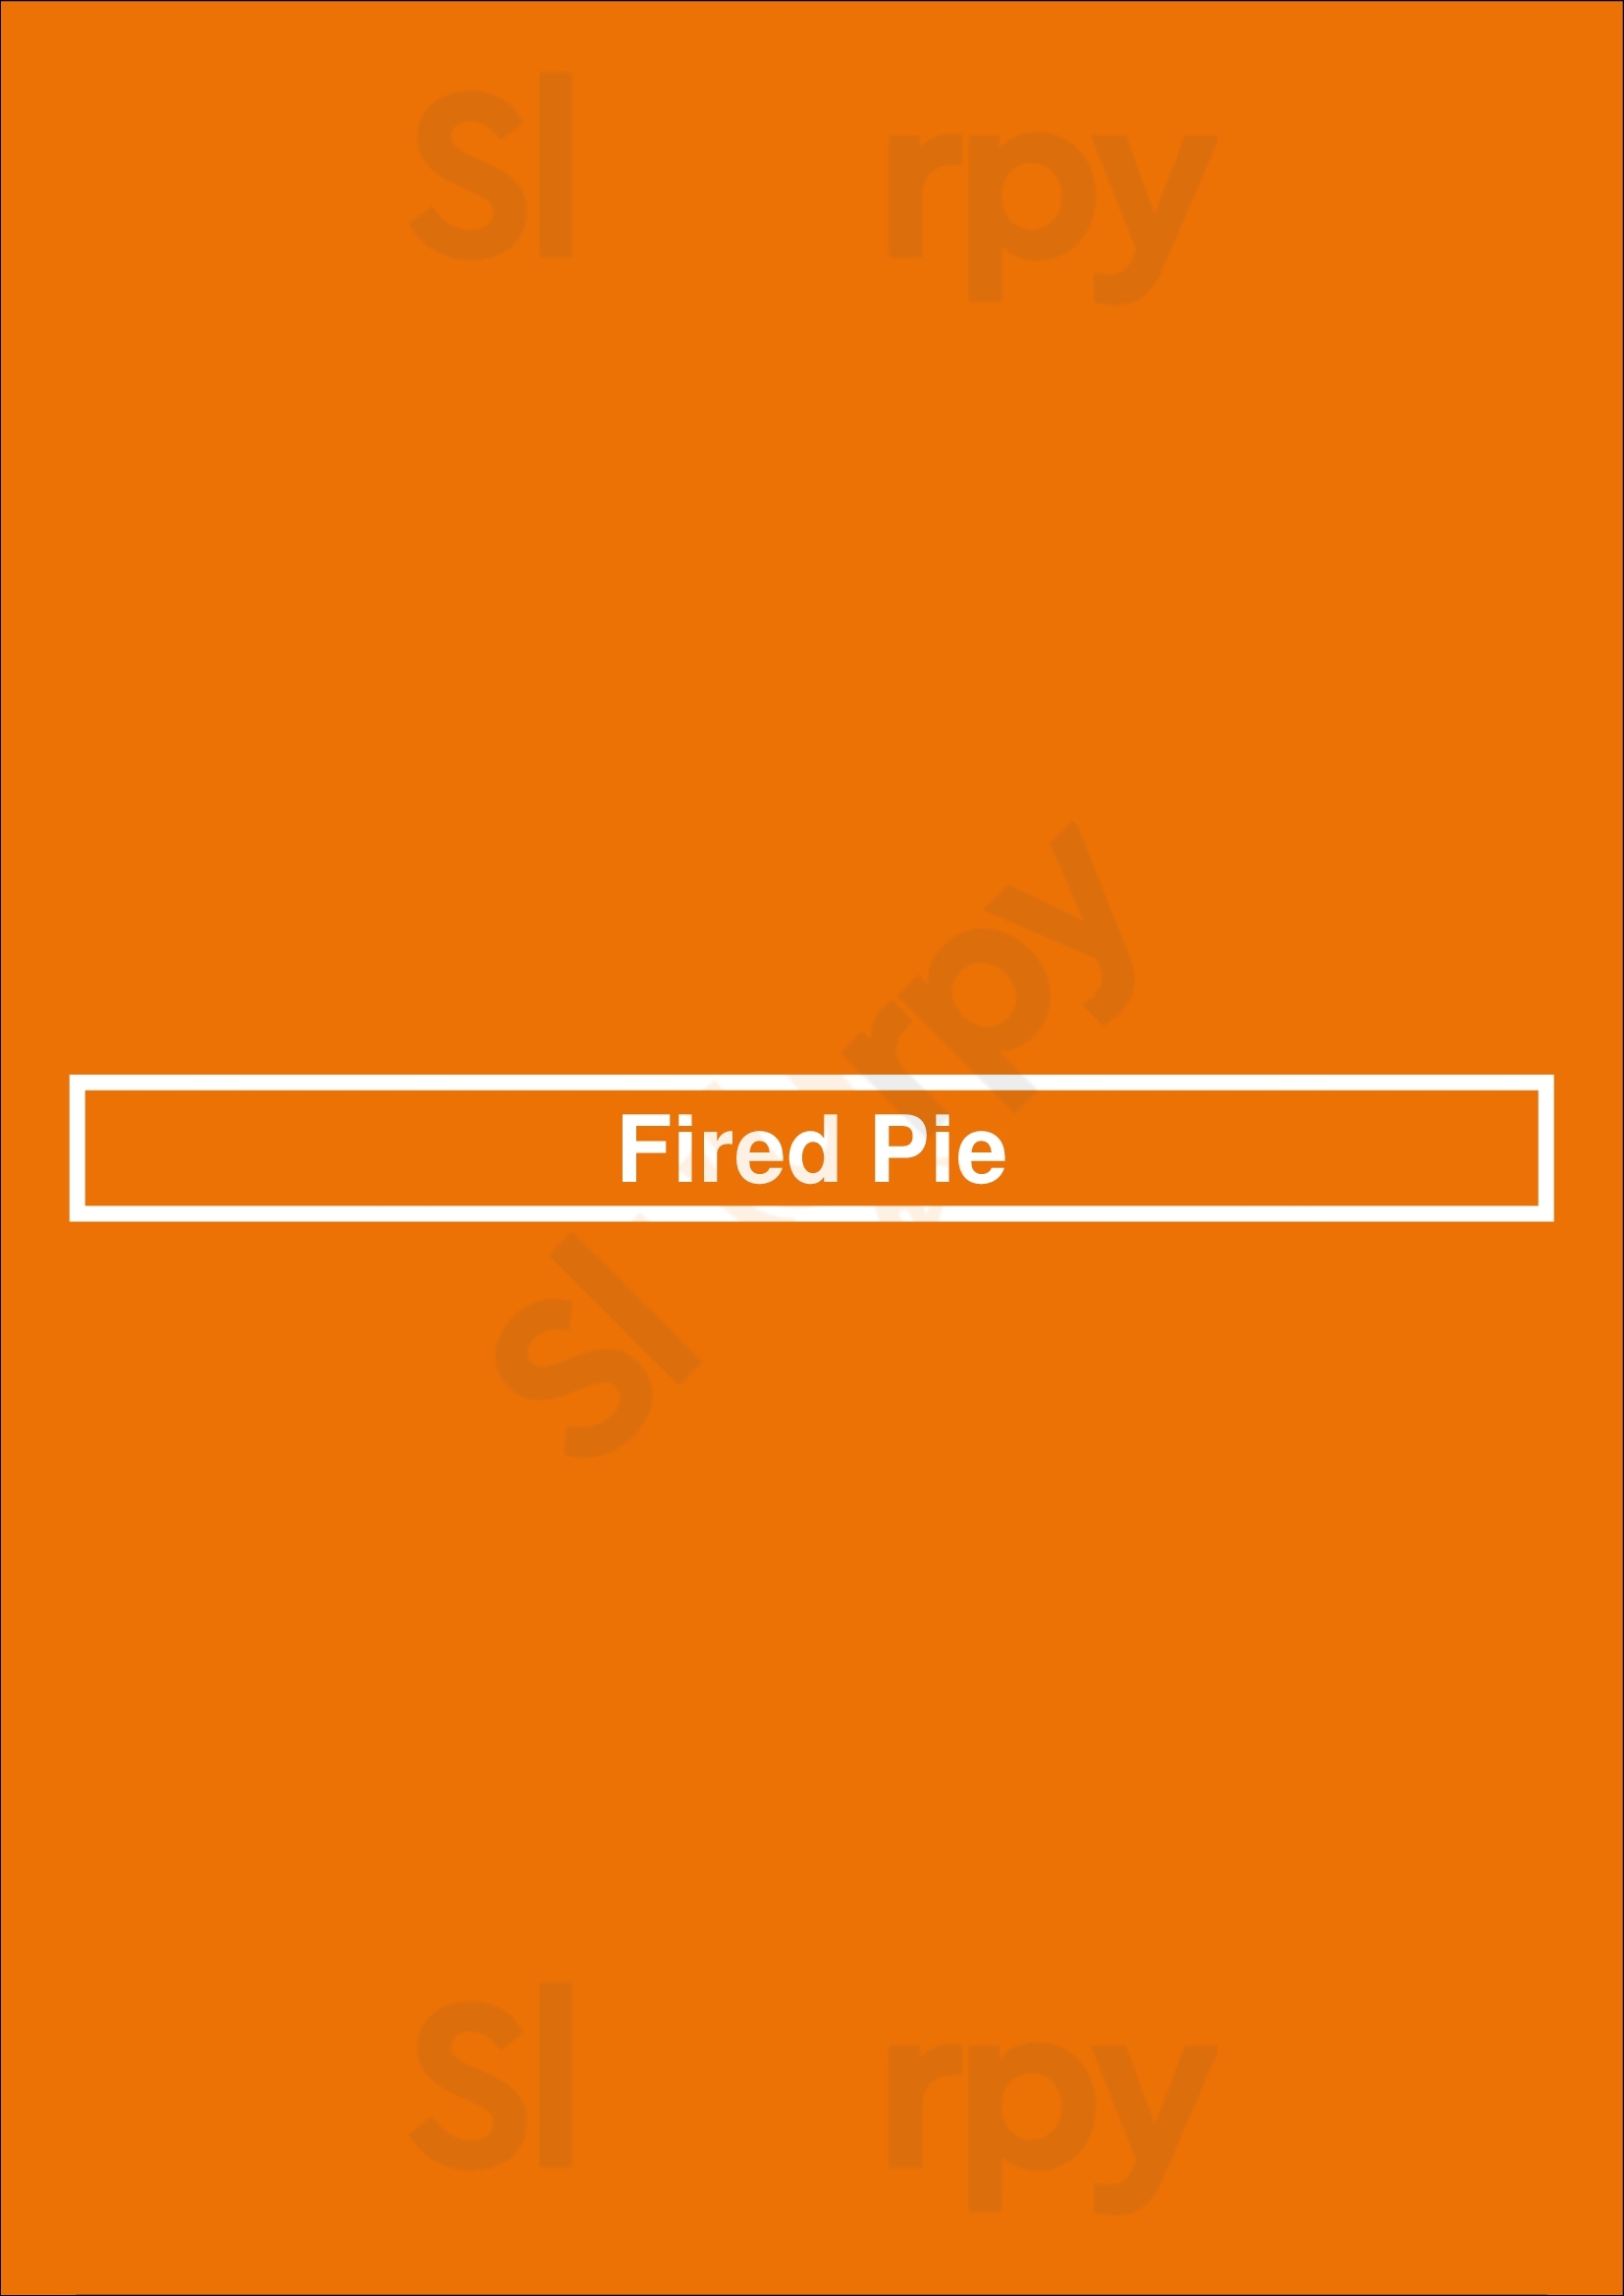 Fired Pie Phoenix Menu - 1